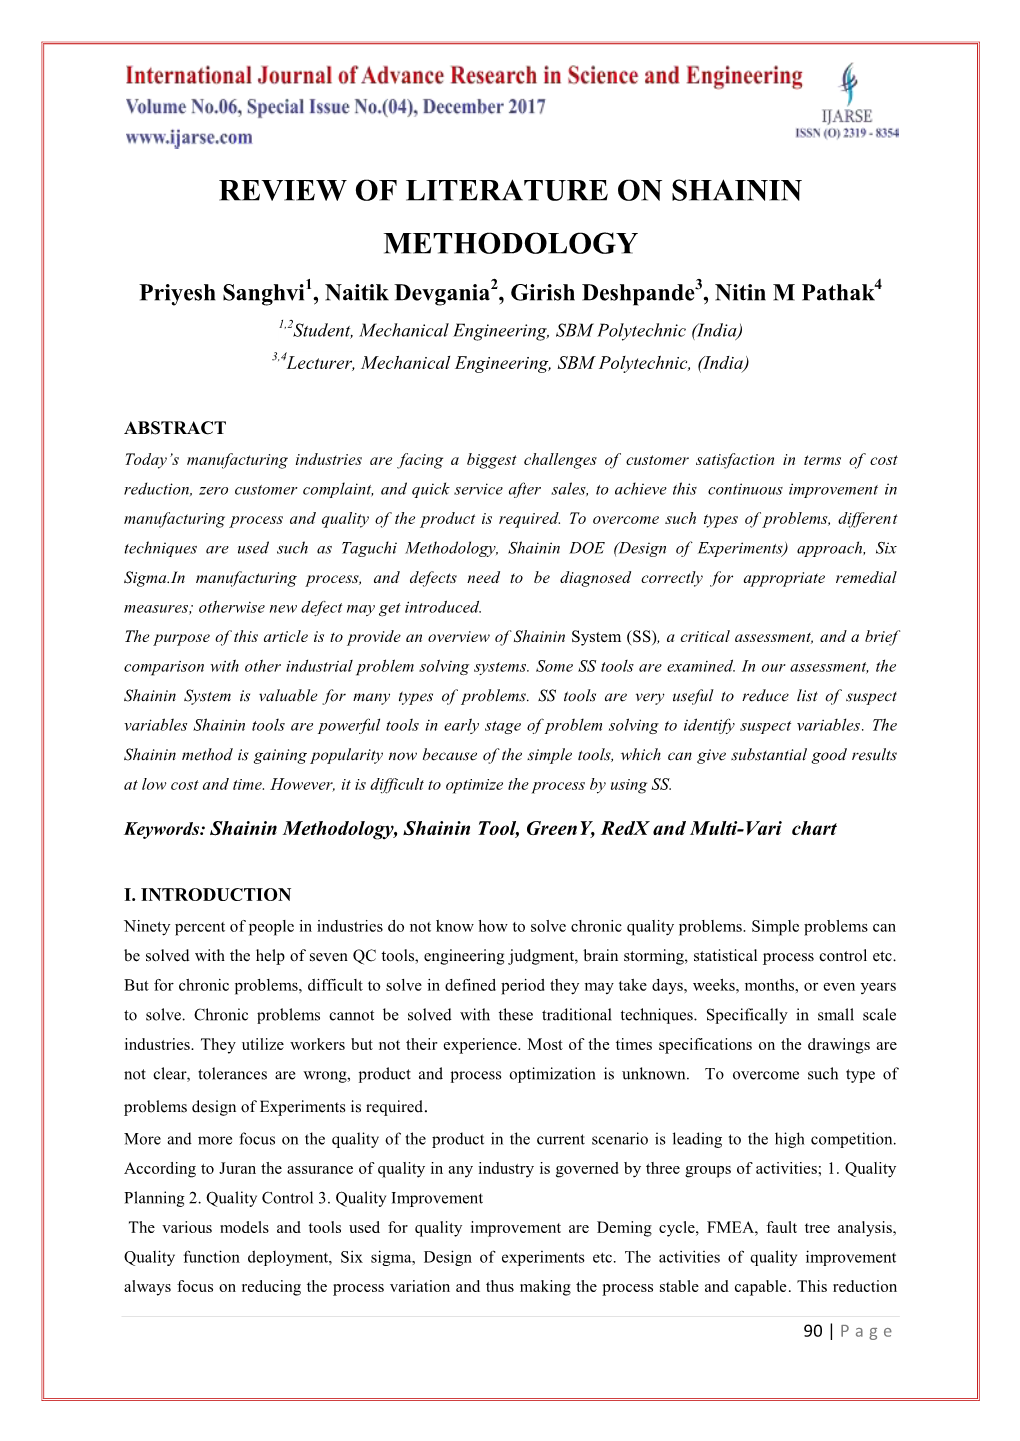 Review of Literature on Shainin Methodology